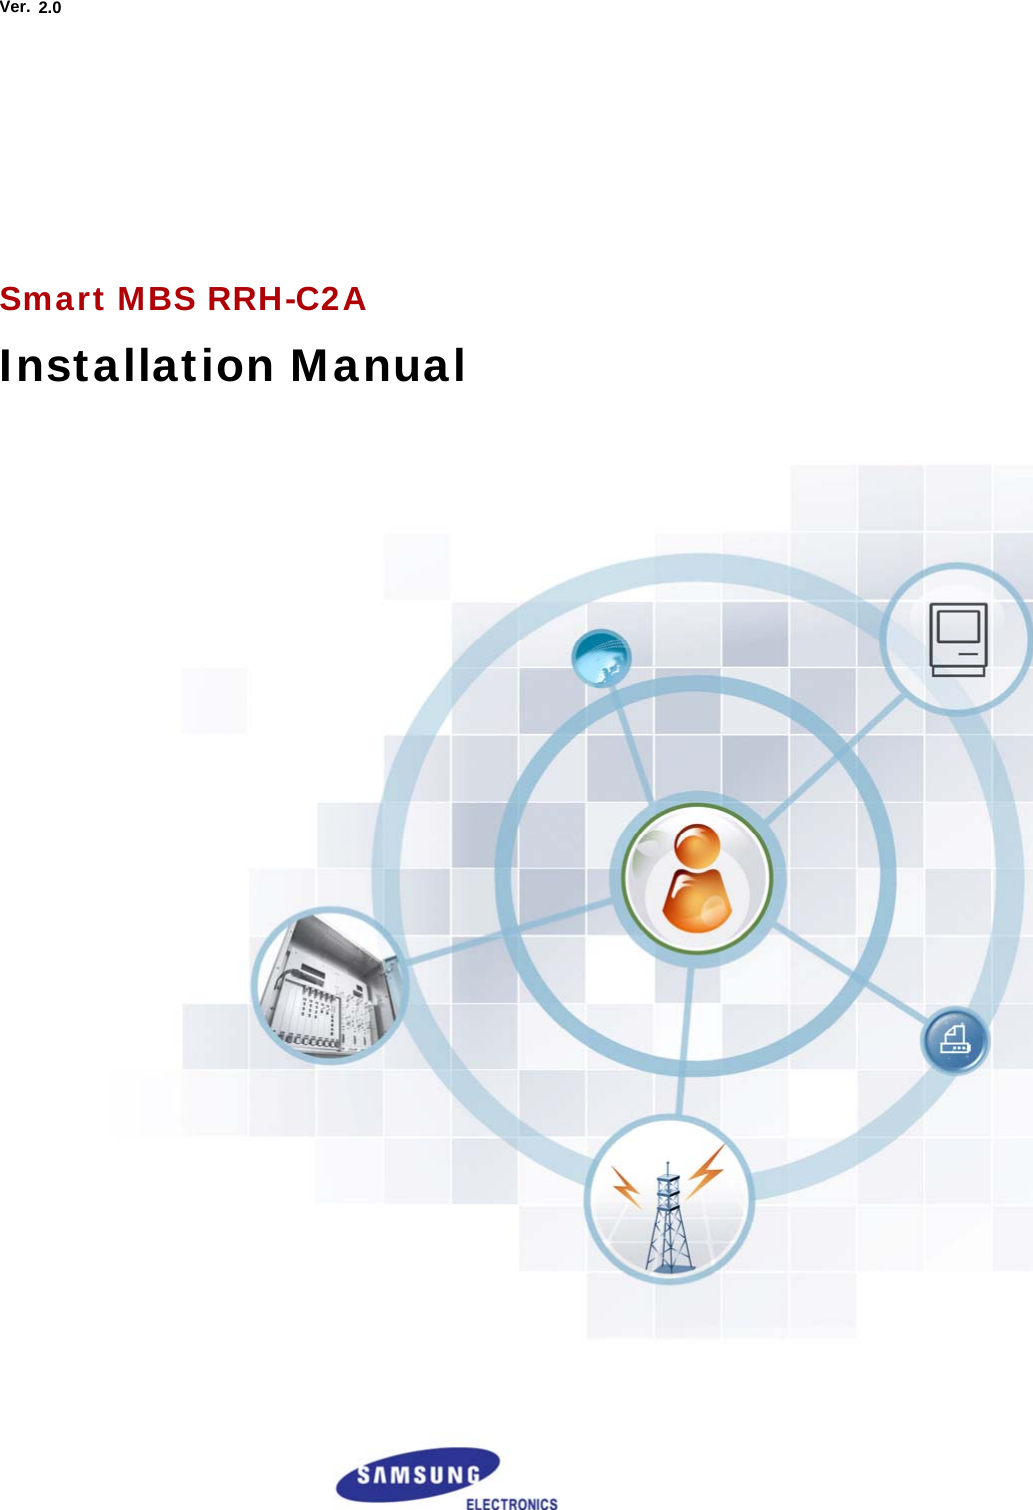  Ver.      2.0        Smart MBS RRH-C2A Installation Manual    